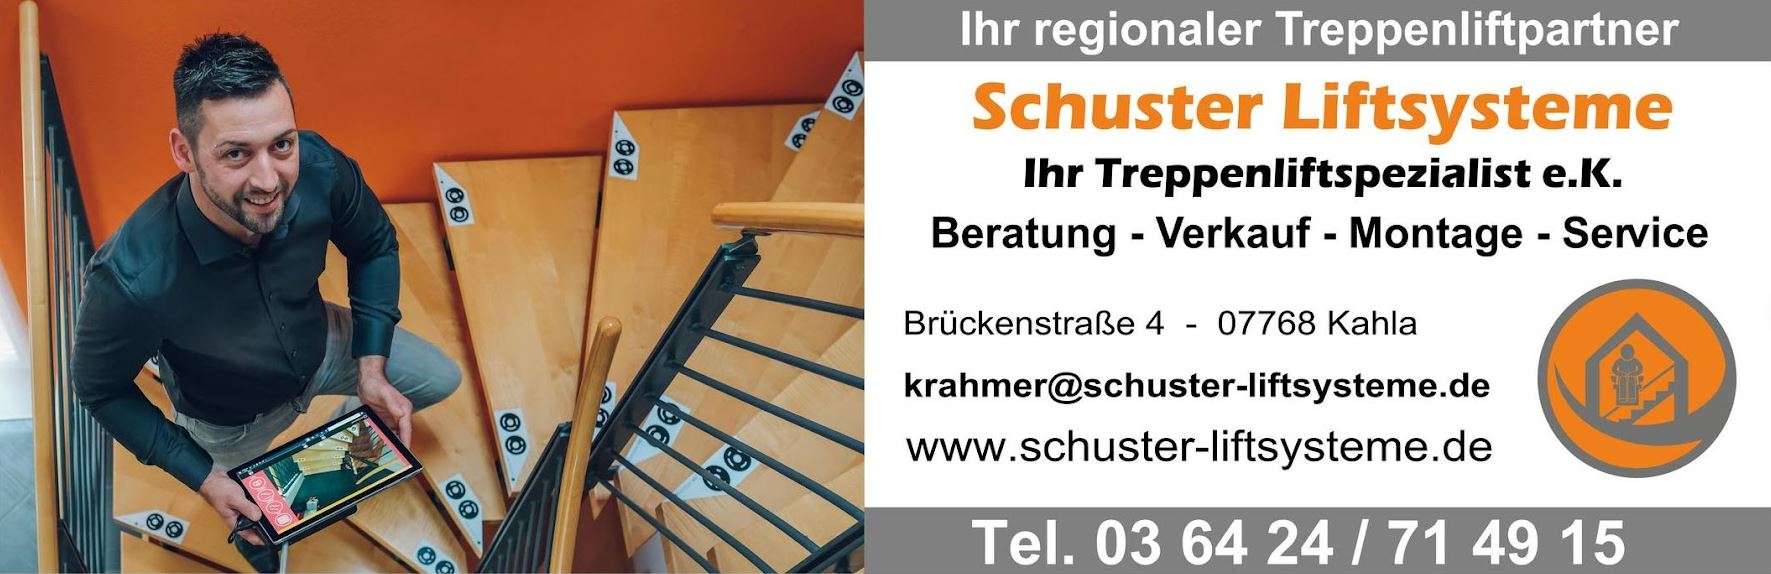 Bilder Schuster Liftsysteme Ihr Treppenliftspezialist e.K.